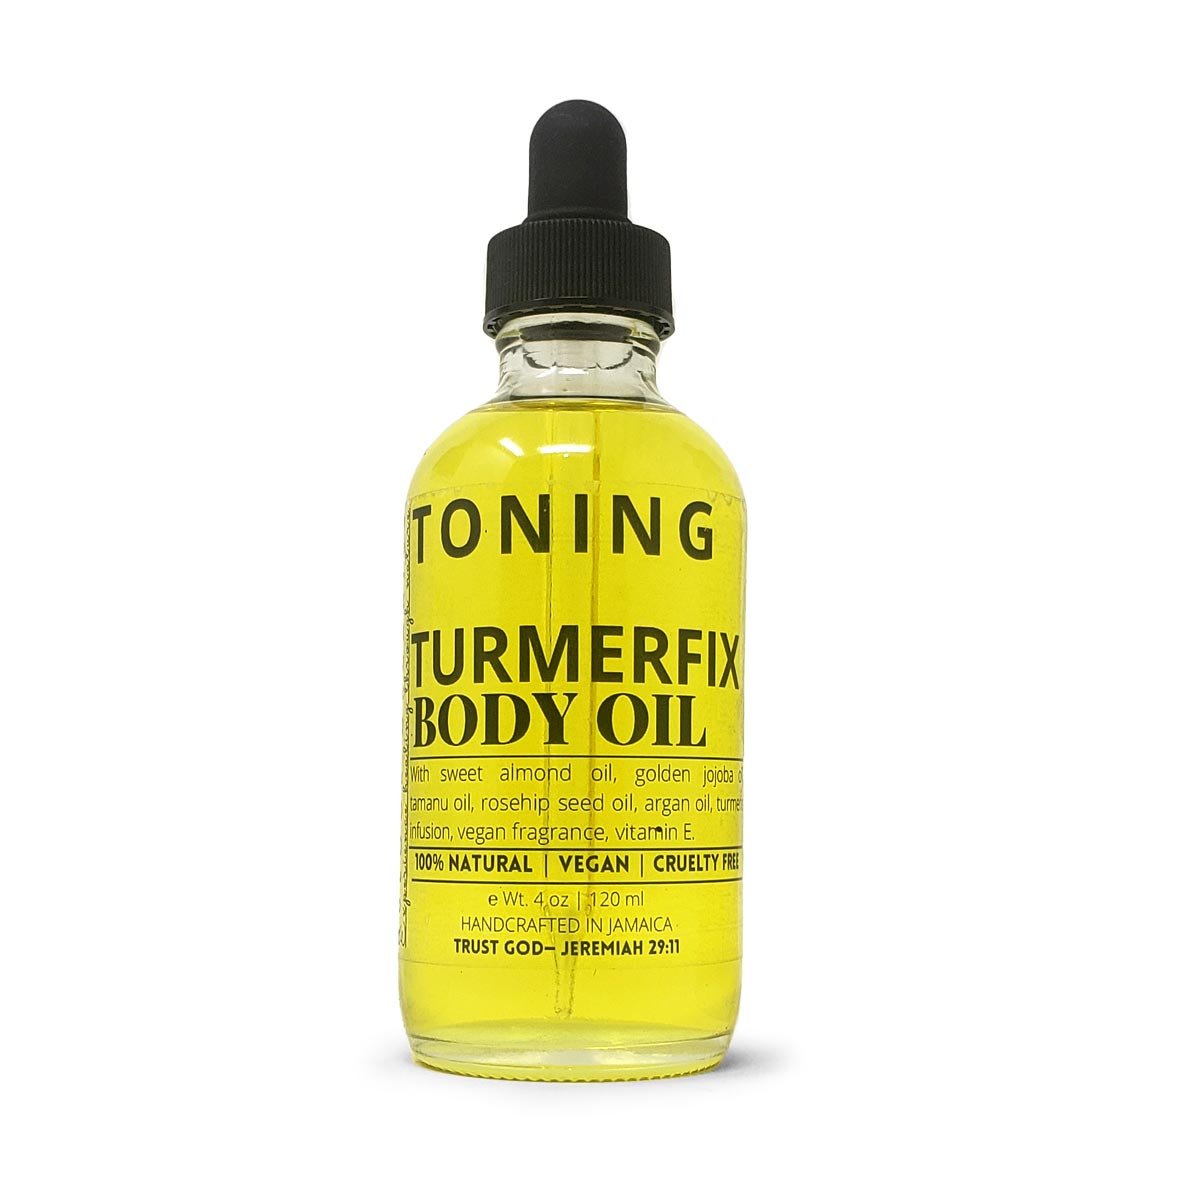 NuLook Organics Turmerfix Body Oil